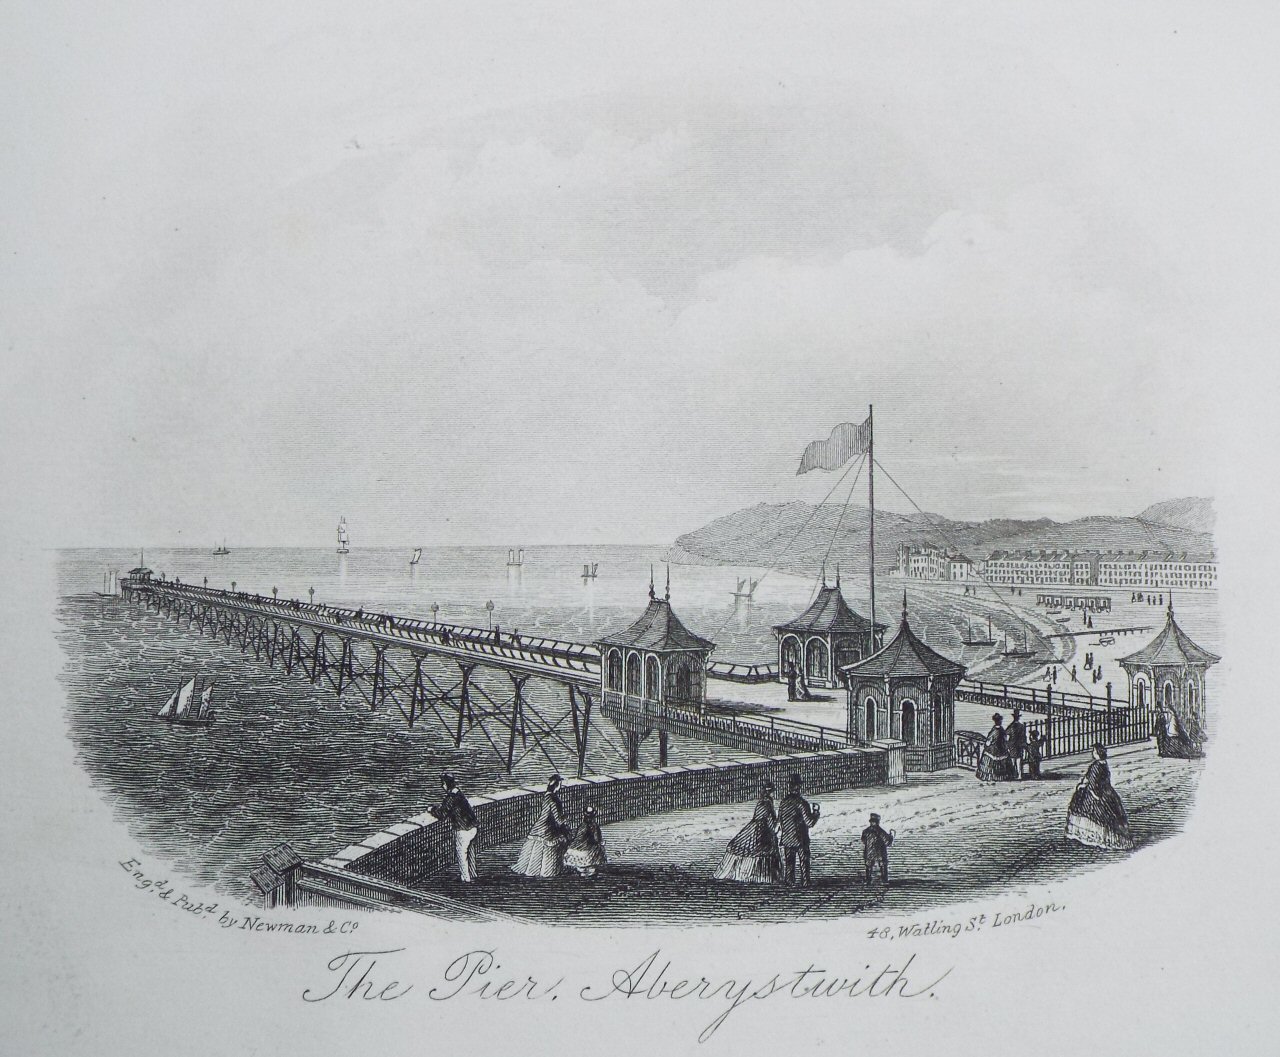 Steel Vignette - The Pier, Aberystwyth. - Newman